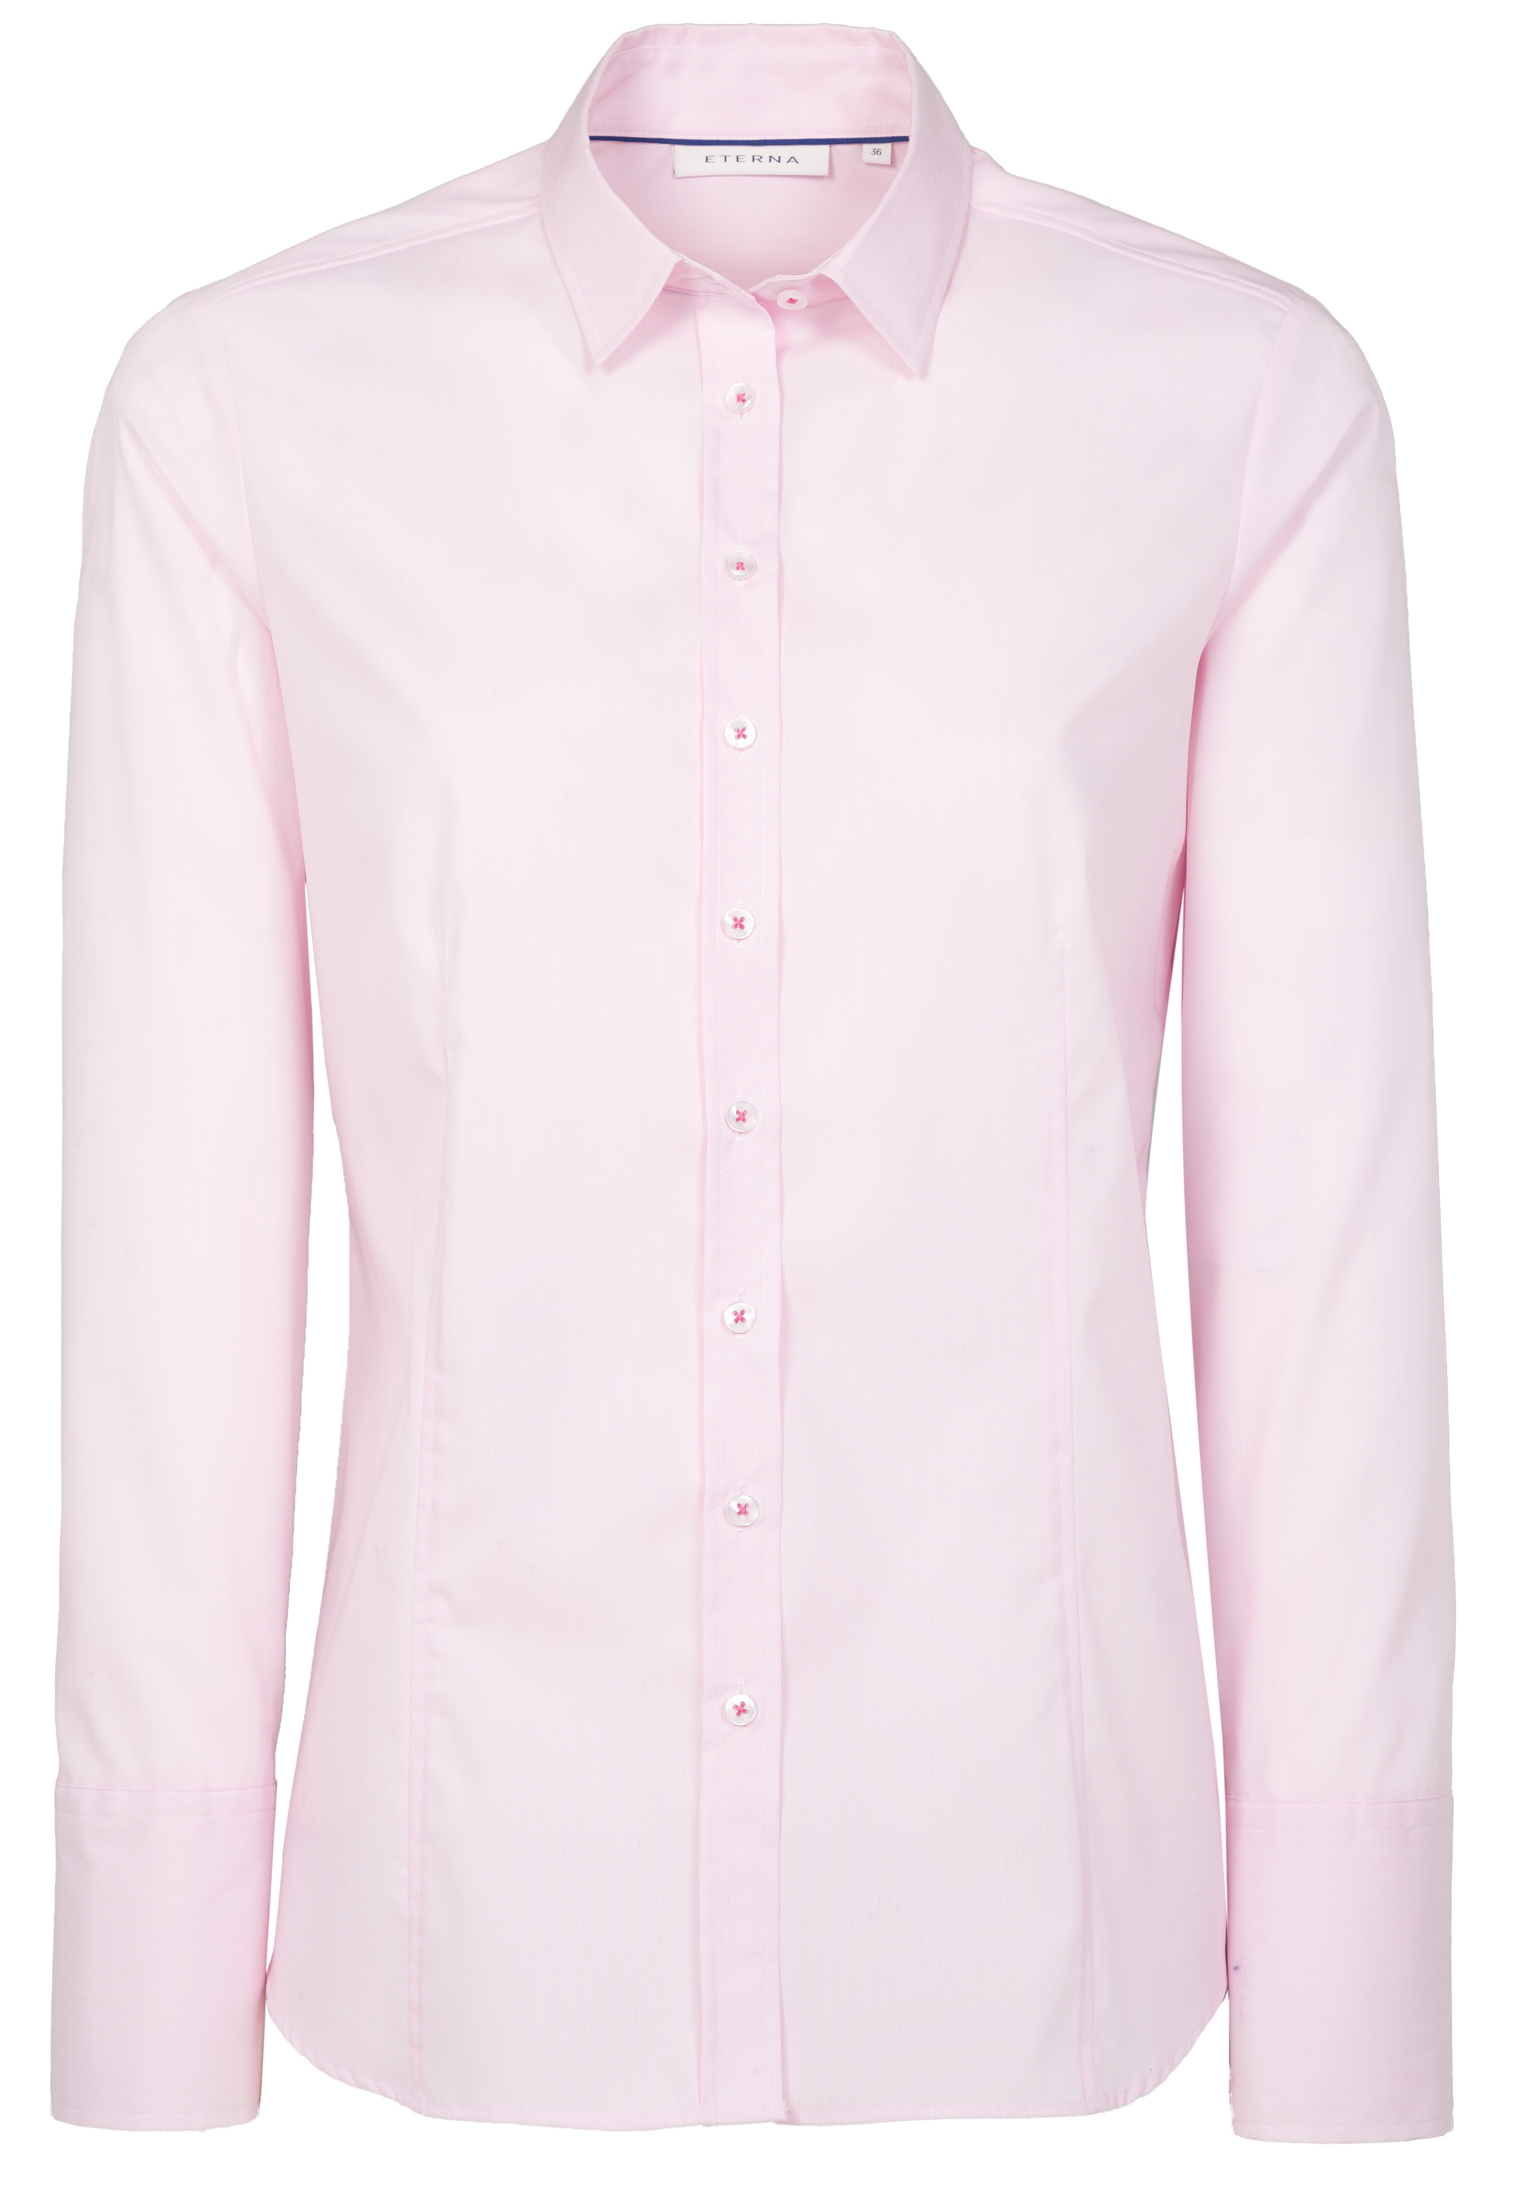 ETERNA MODERN CLASSIC Langarm Eterna Blusen Bluse | | Jeans-Manufaktur | gestreift Bekleidung D624.51 Fit 6151 | Damen | Modern rosa-weiß